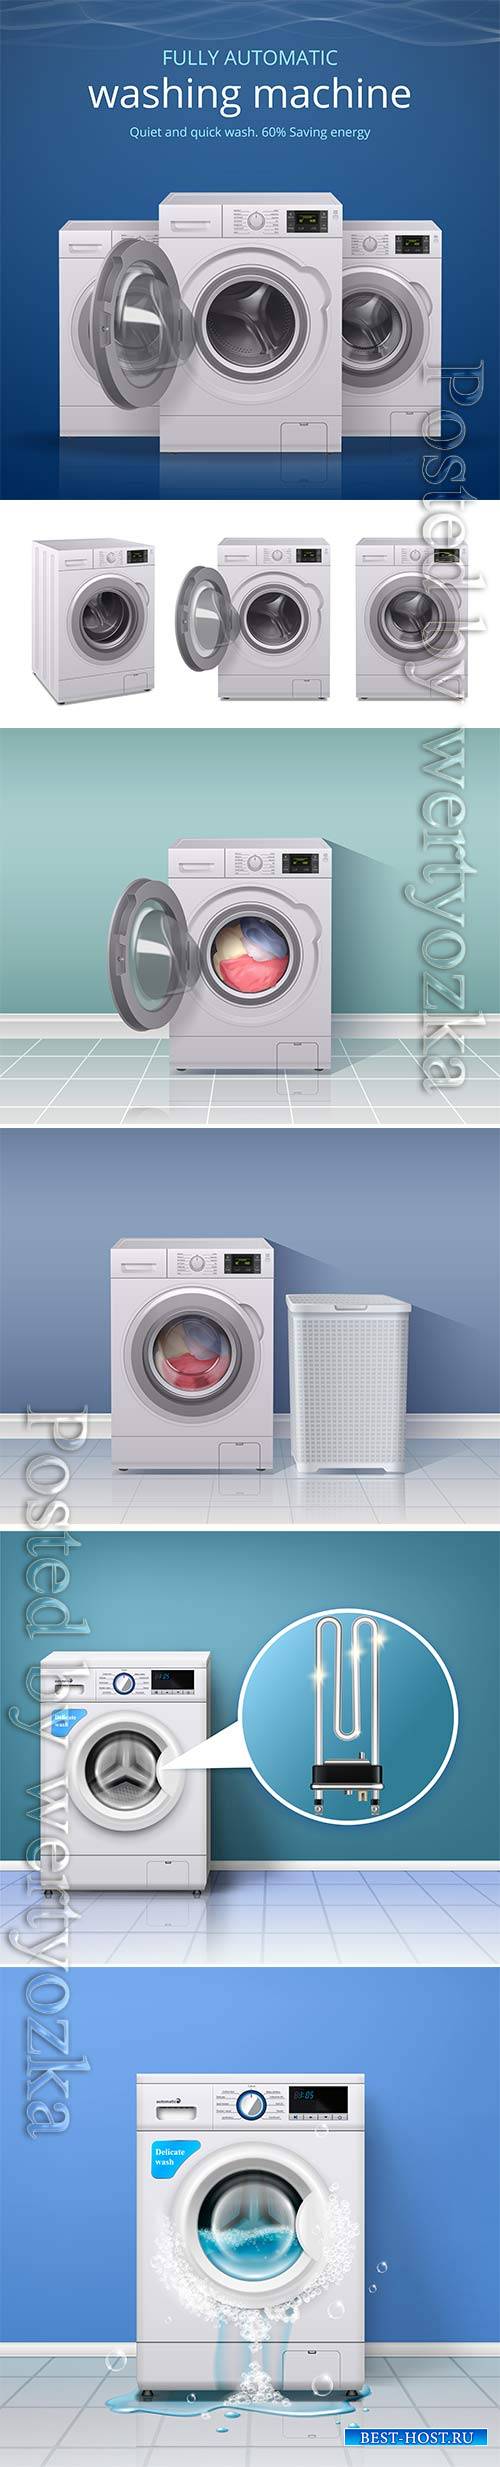 Washing machines in vector